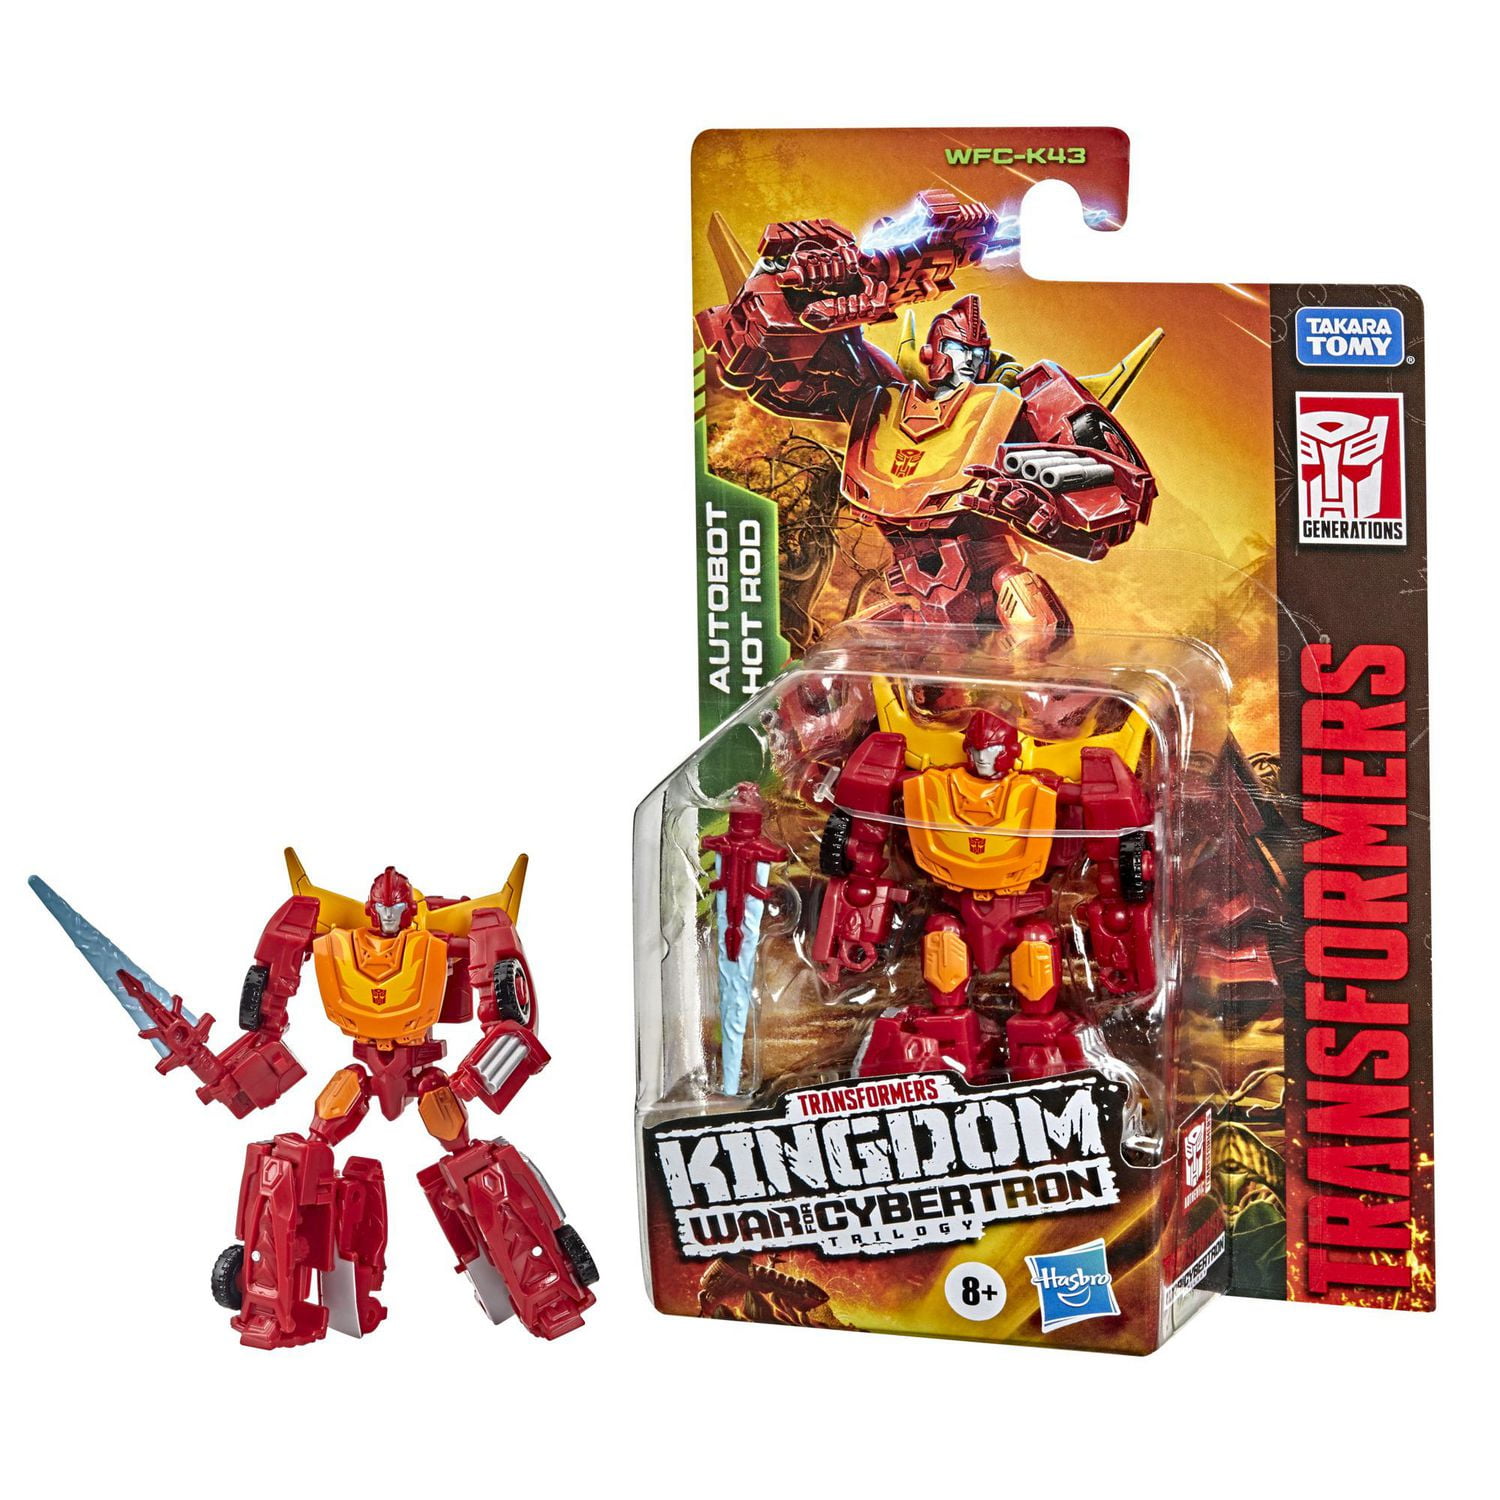 Transformers - War for Cybertron: Kingdom - Core Class Autobot Hot Rod (WFC-K23) Action Figure